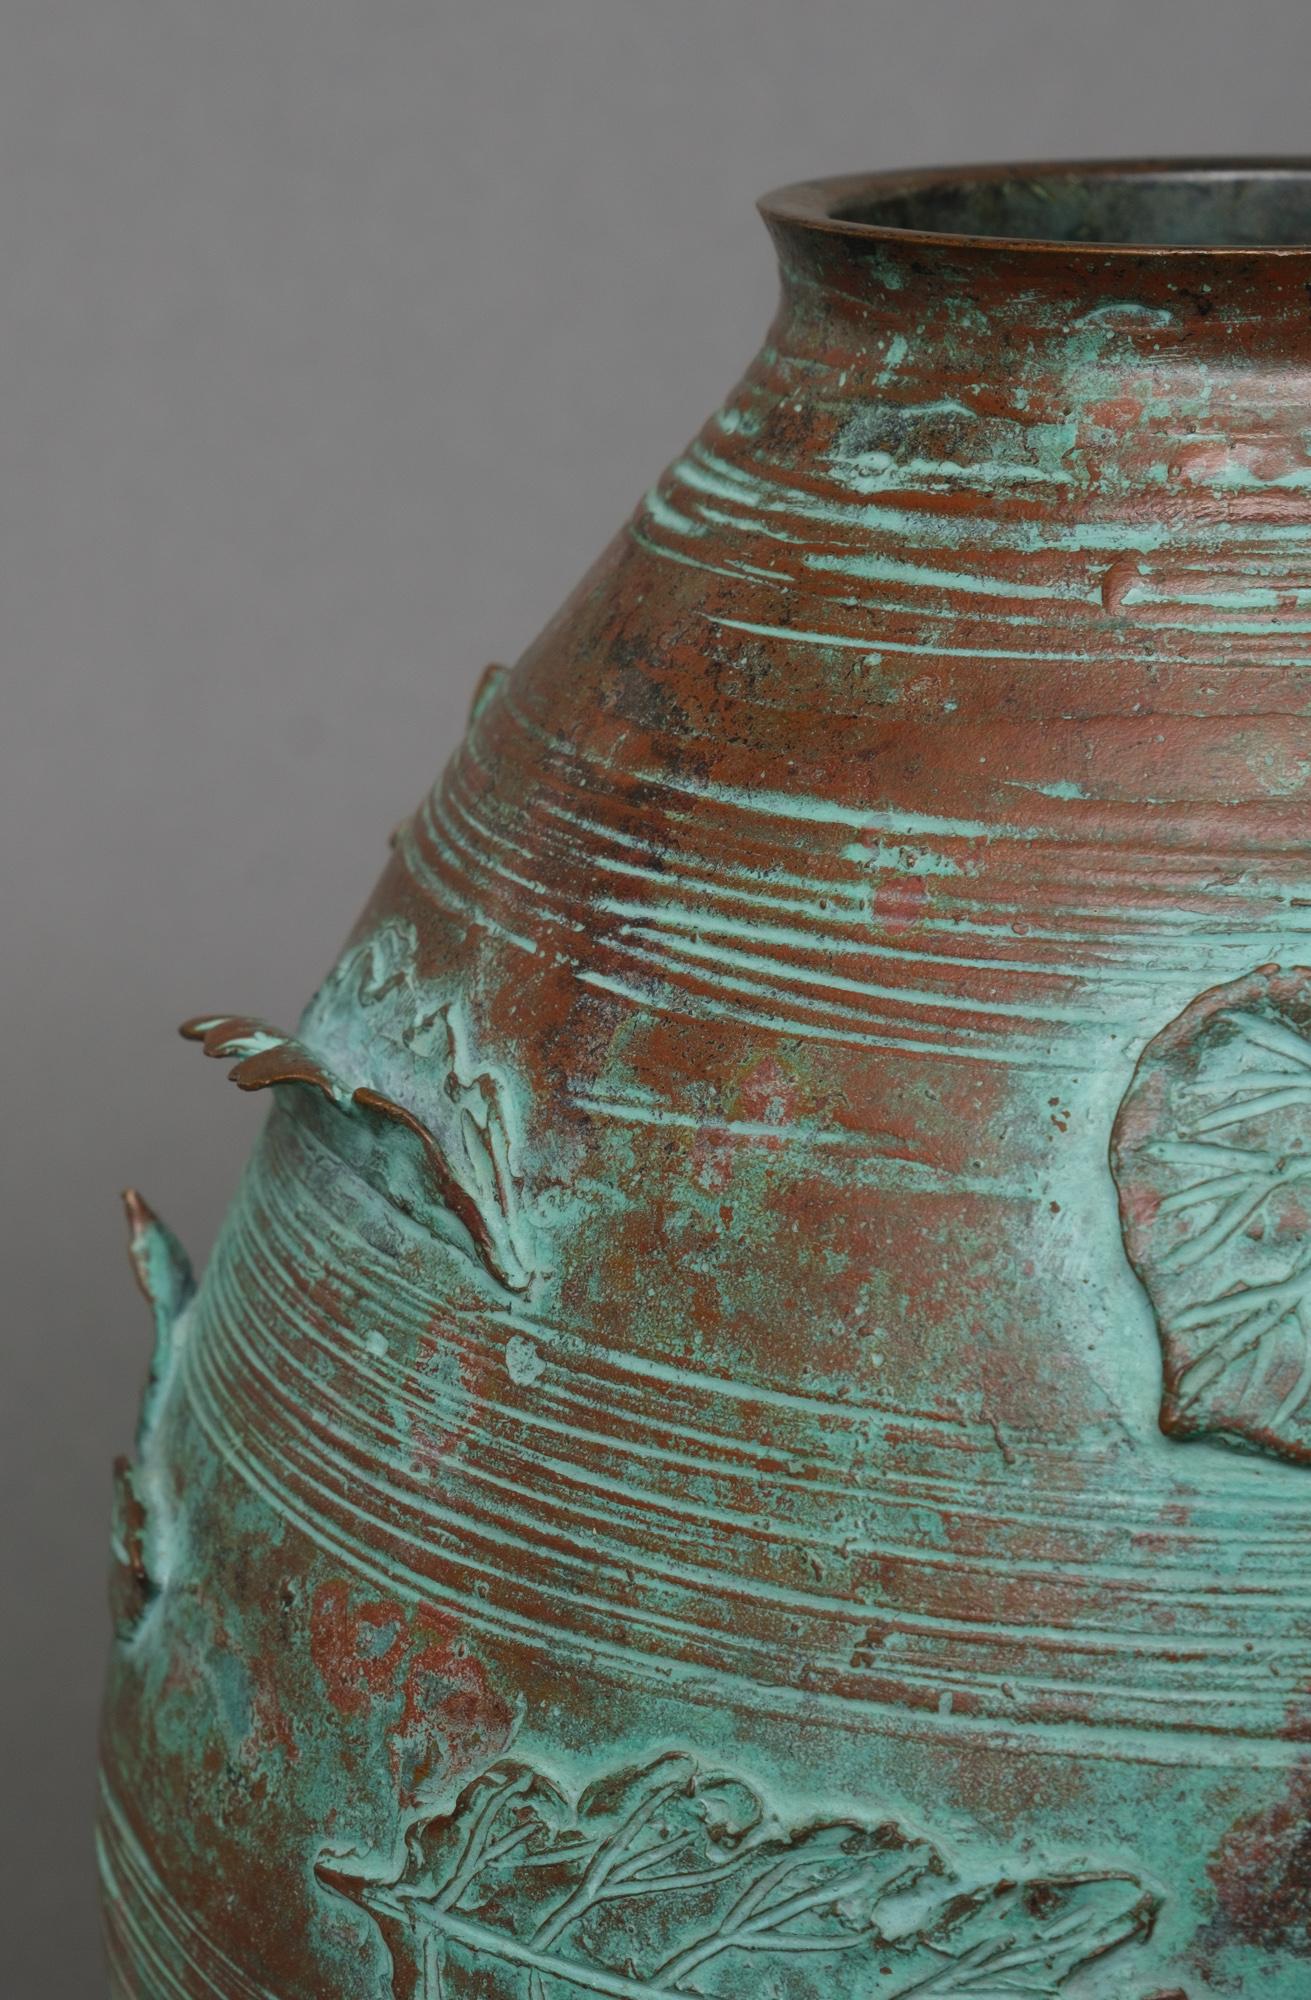 Bronze Ovoid Vase with High Relief Leaf Design by Nitten Artist Hirai Noboru 平井昇 For Sale 1